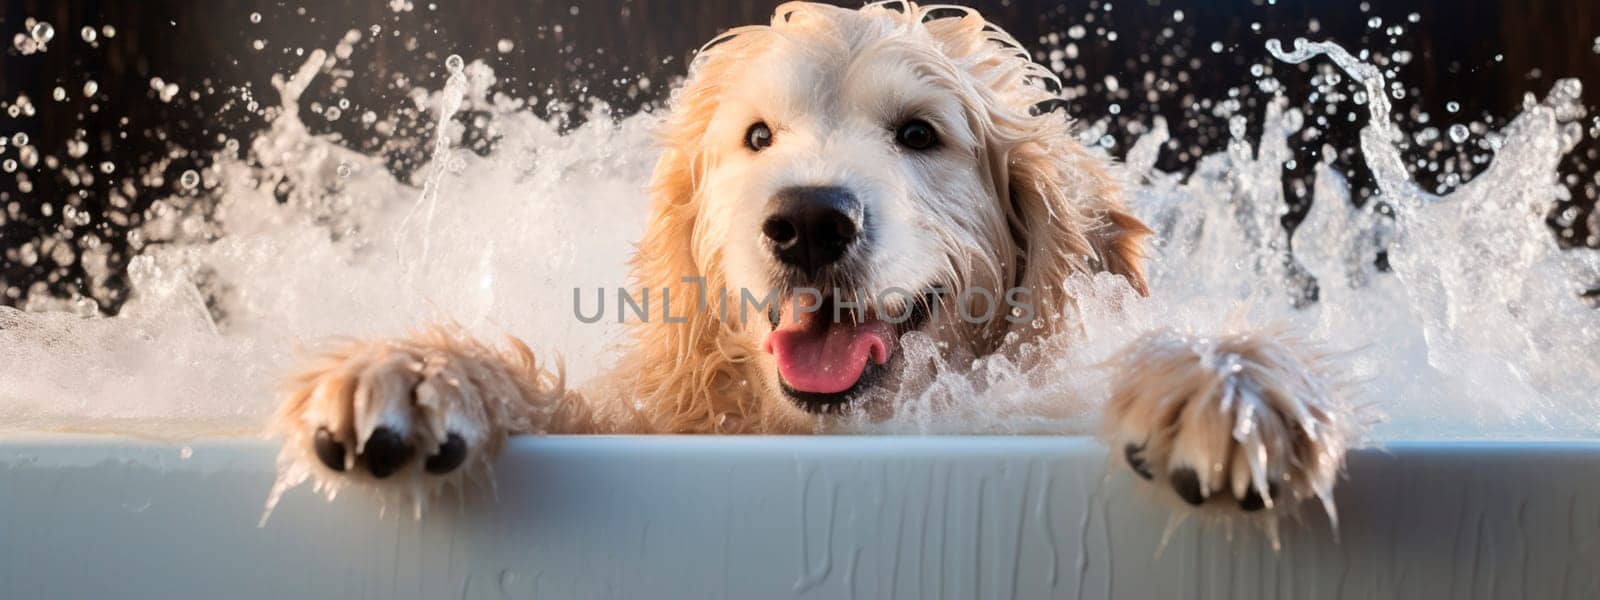 The dog bathes in a bubble bath. Generative AI, by yanadjana